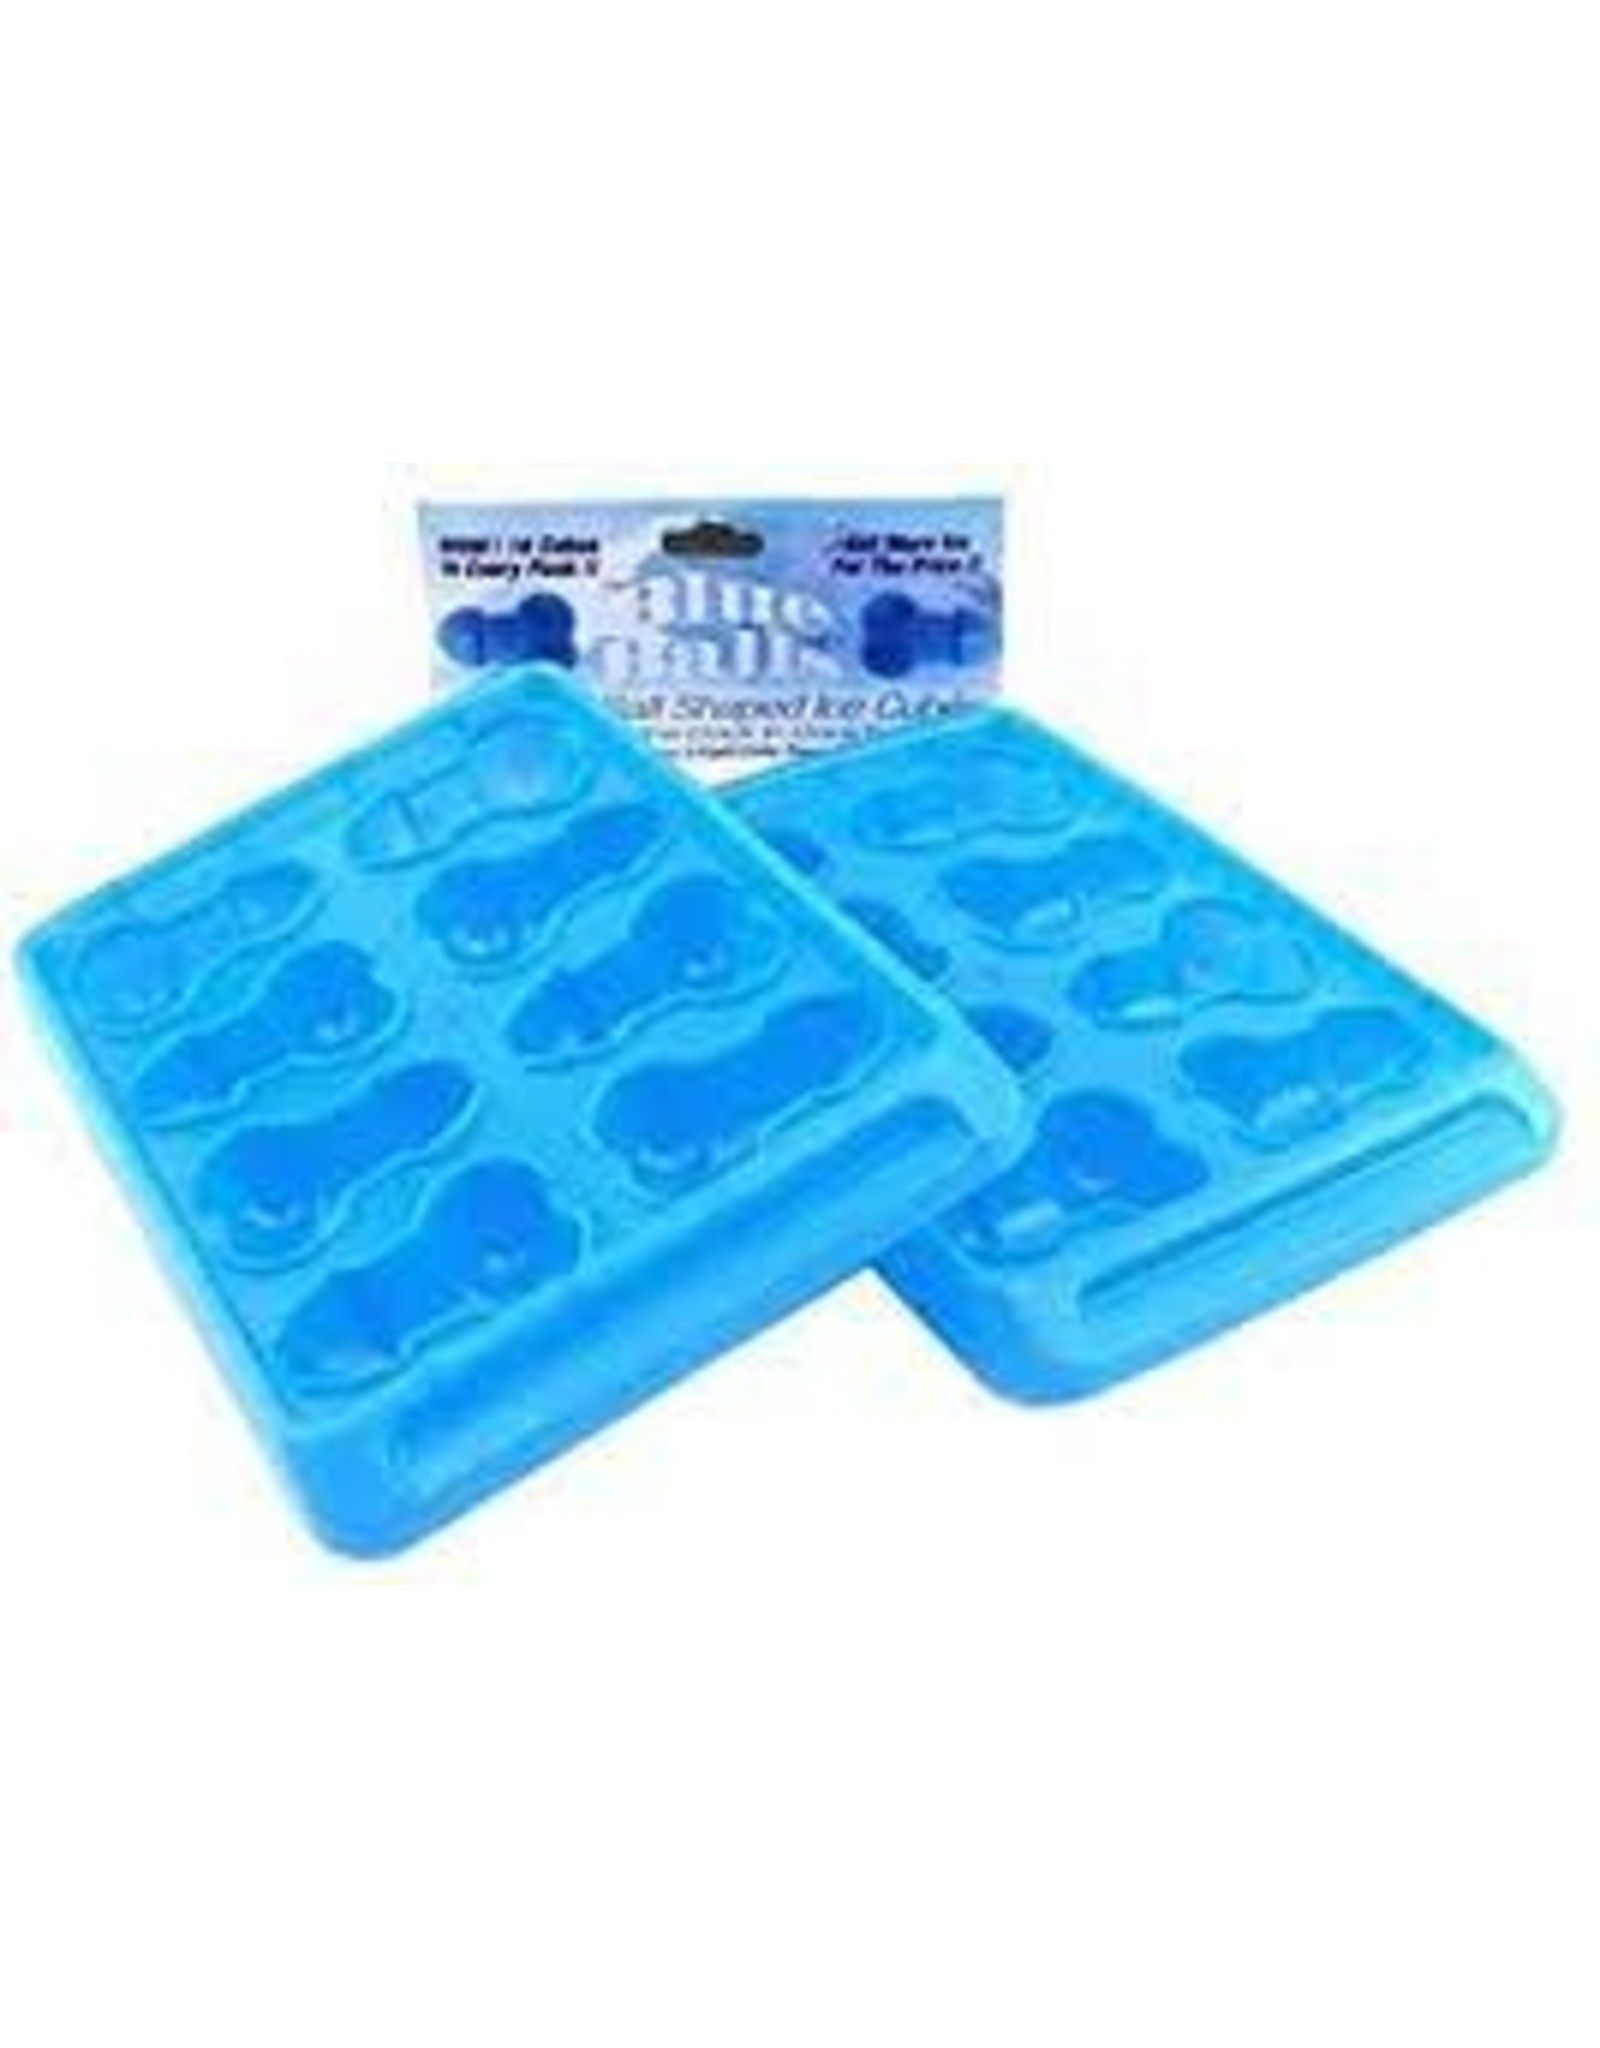 Hott Products Blue Balls Ice Cube Tray